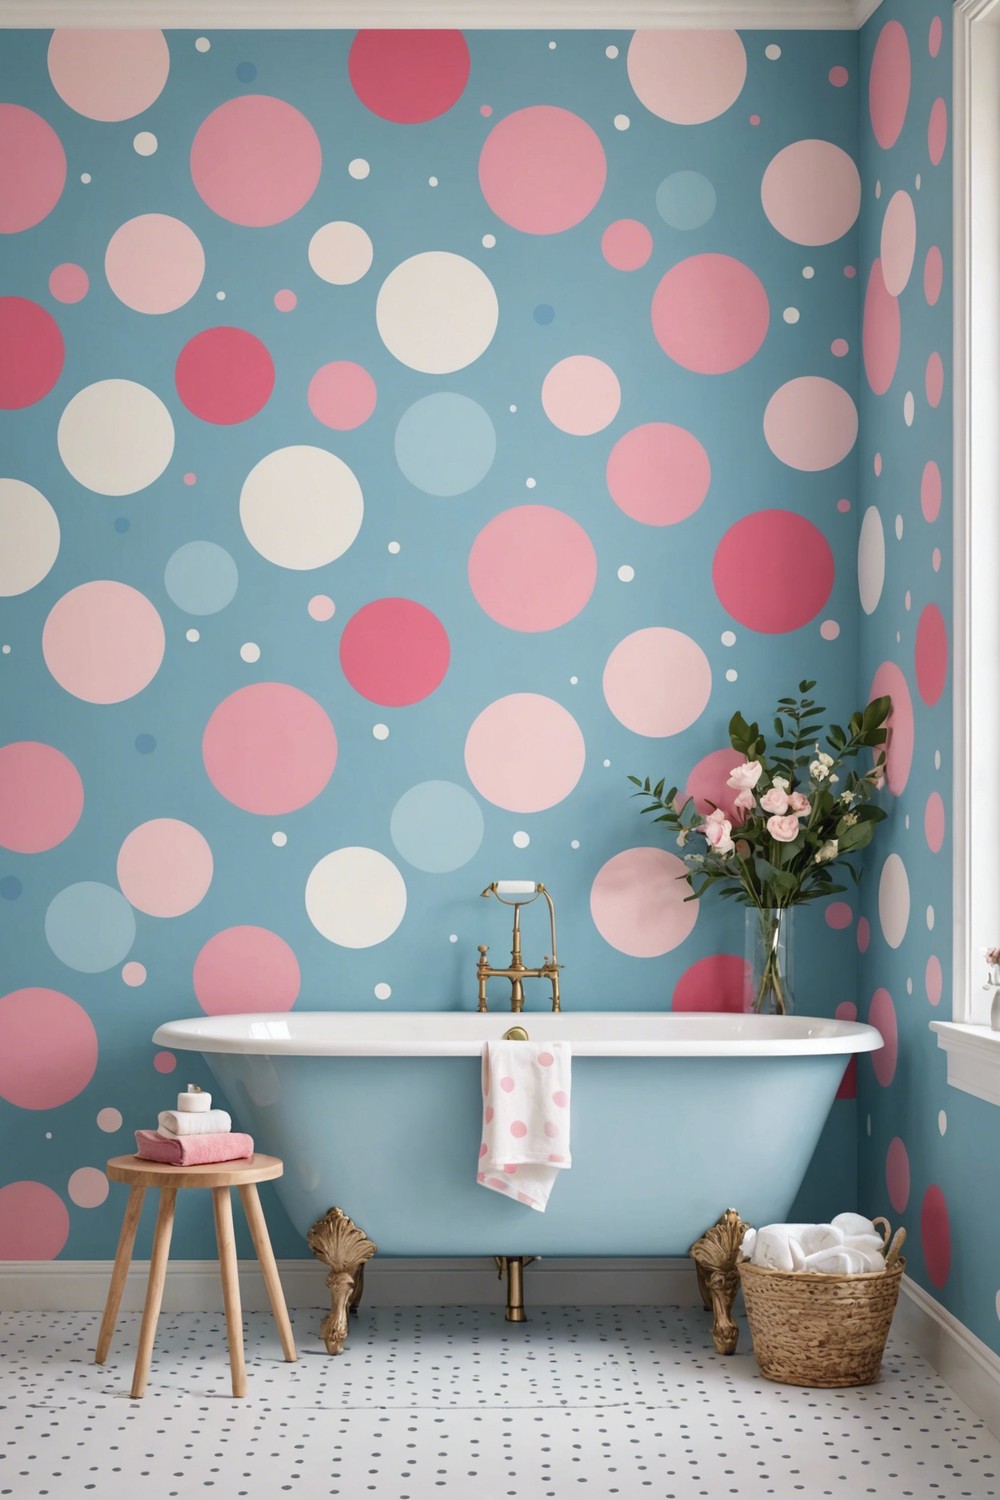 Polka Dot Party: Fun and Playful Bathroom Wallpaper Designs